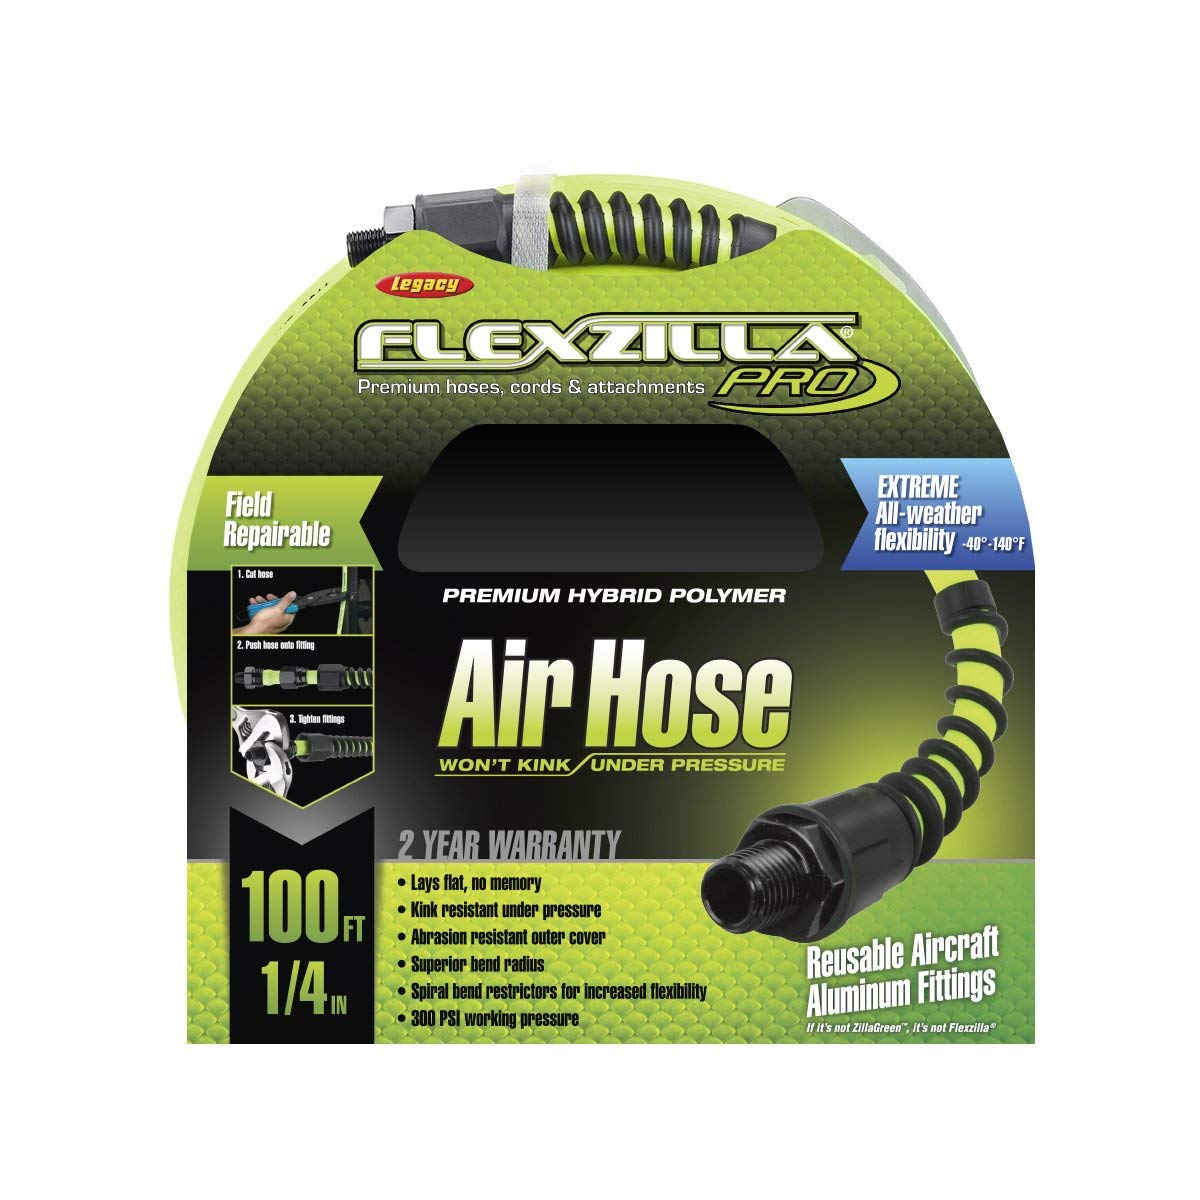 Flexzilla Pro Field Repairable 1/4" x 100' Air Hose